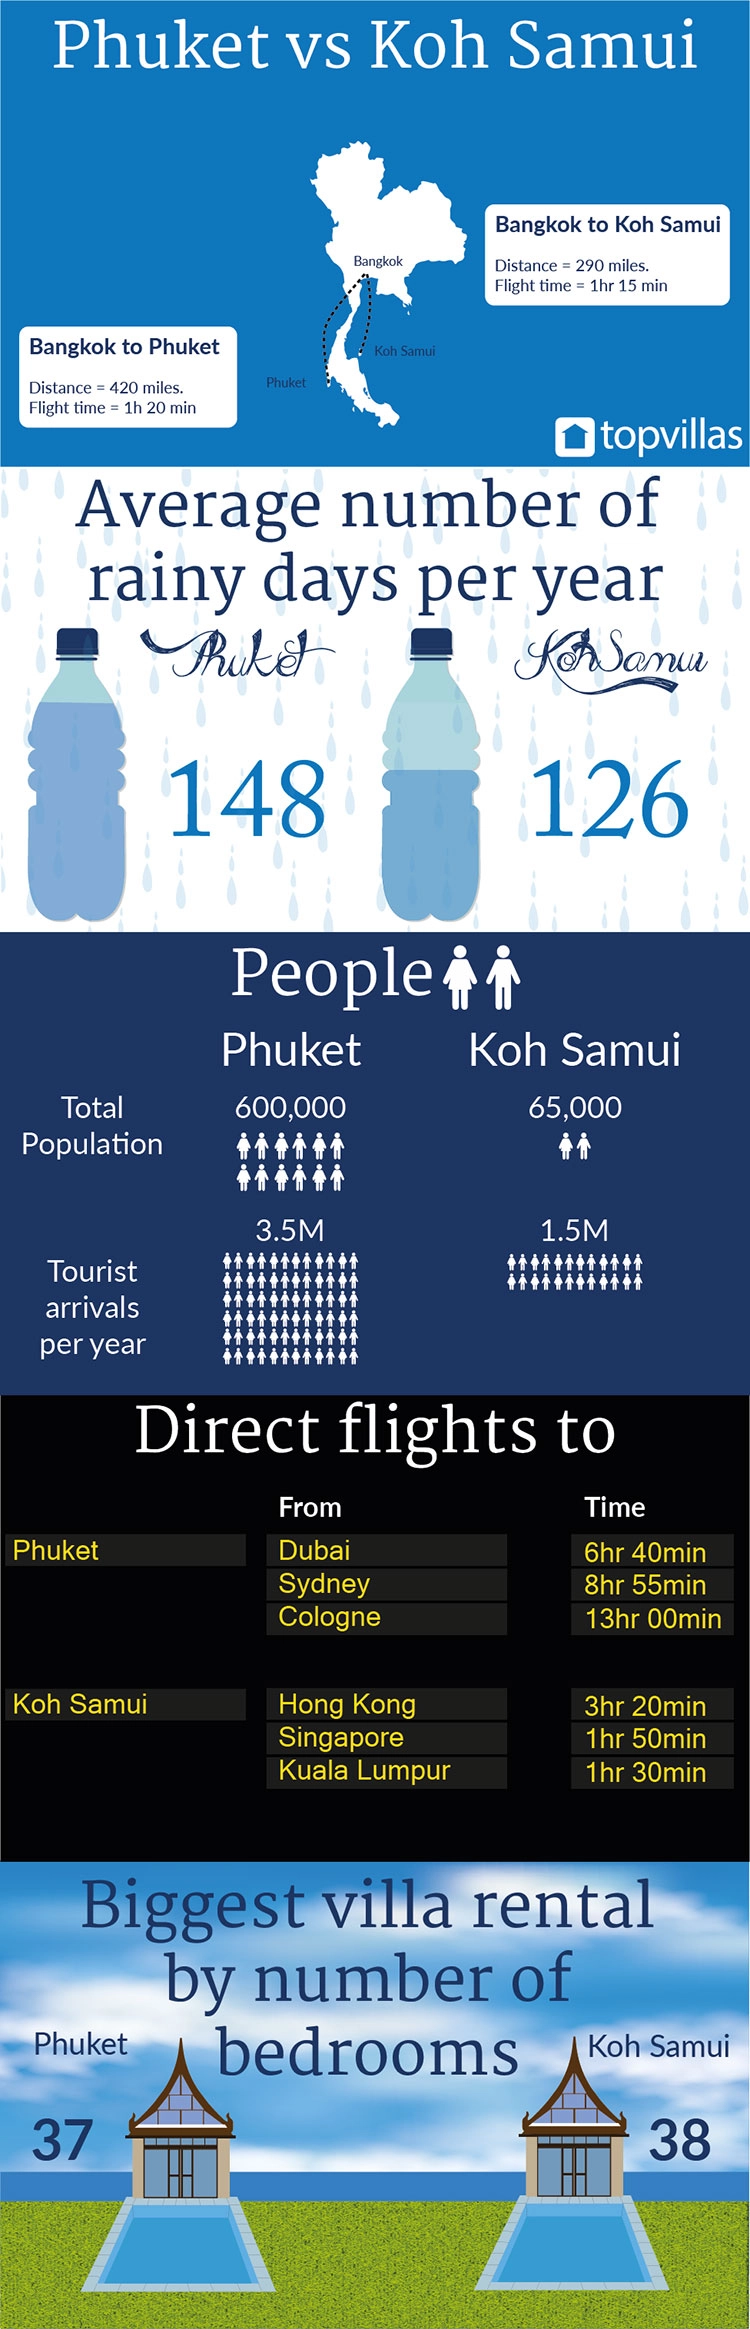 Infographic showing Phuket vs Koh Samui